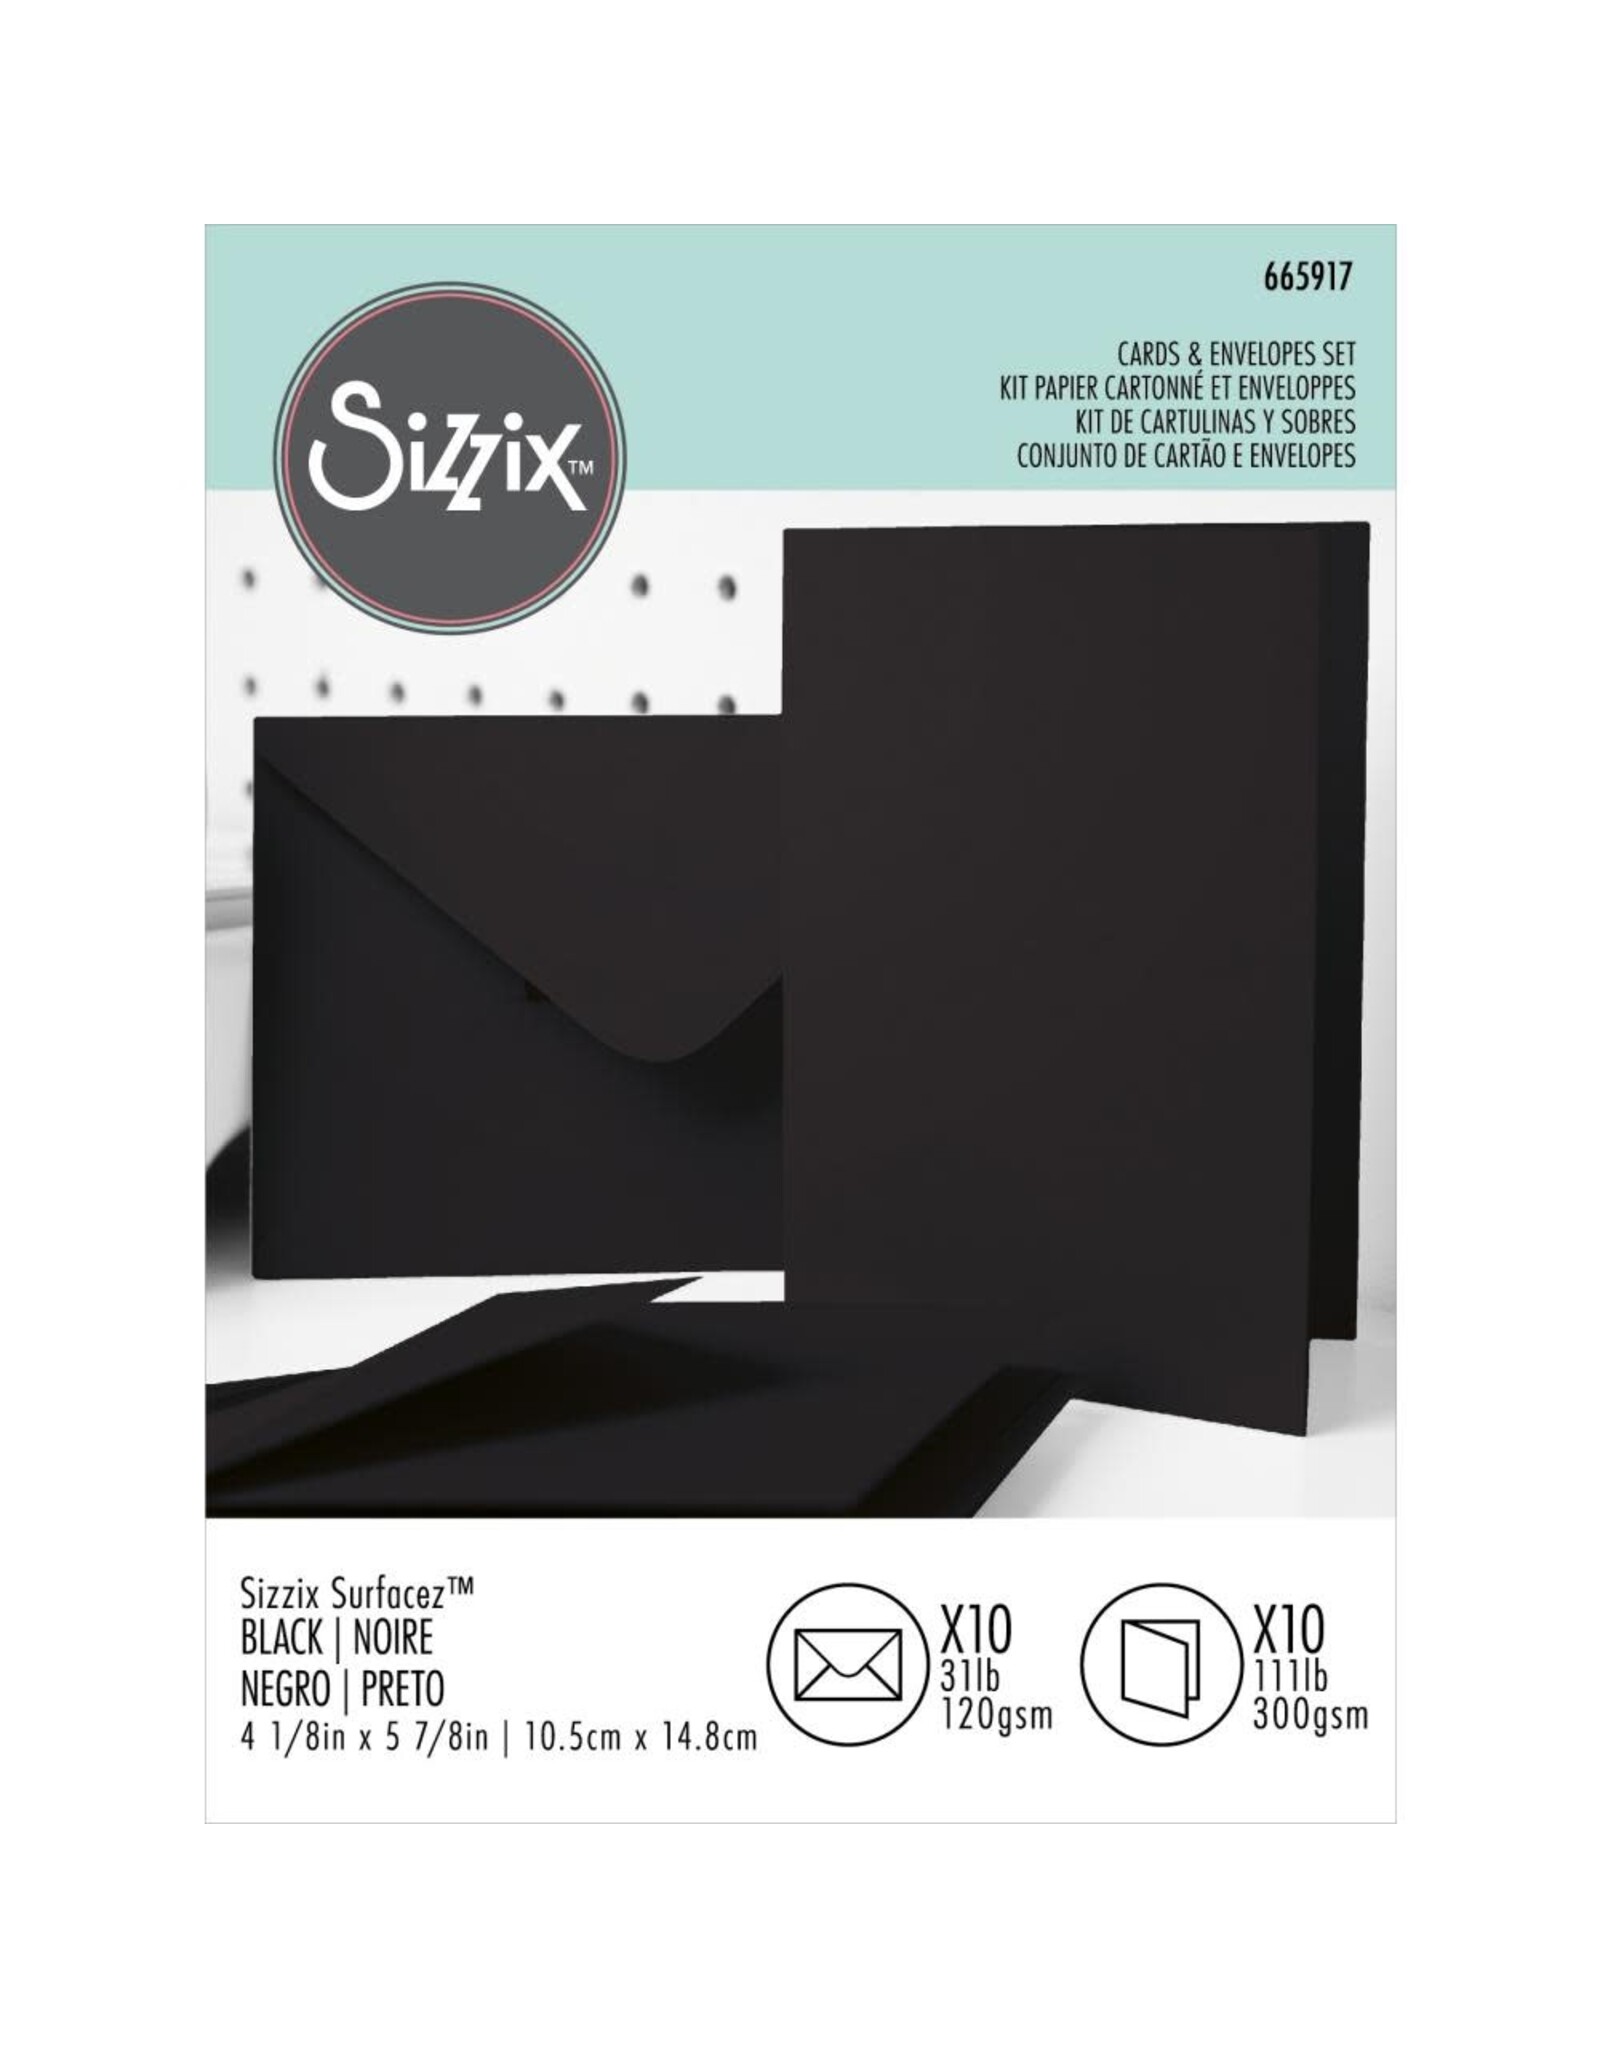 Sizzix Surfacez Cards & Envelopes, A6, Black, 10PK